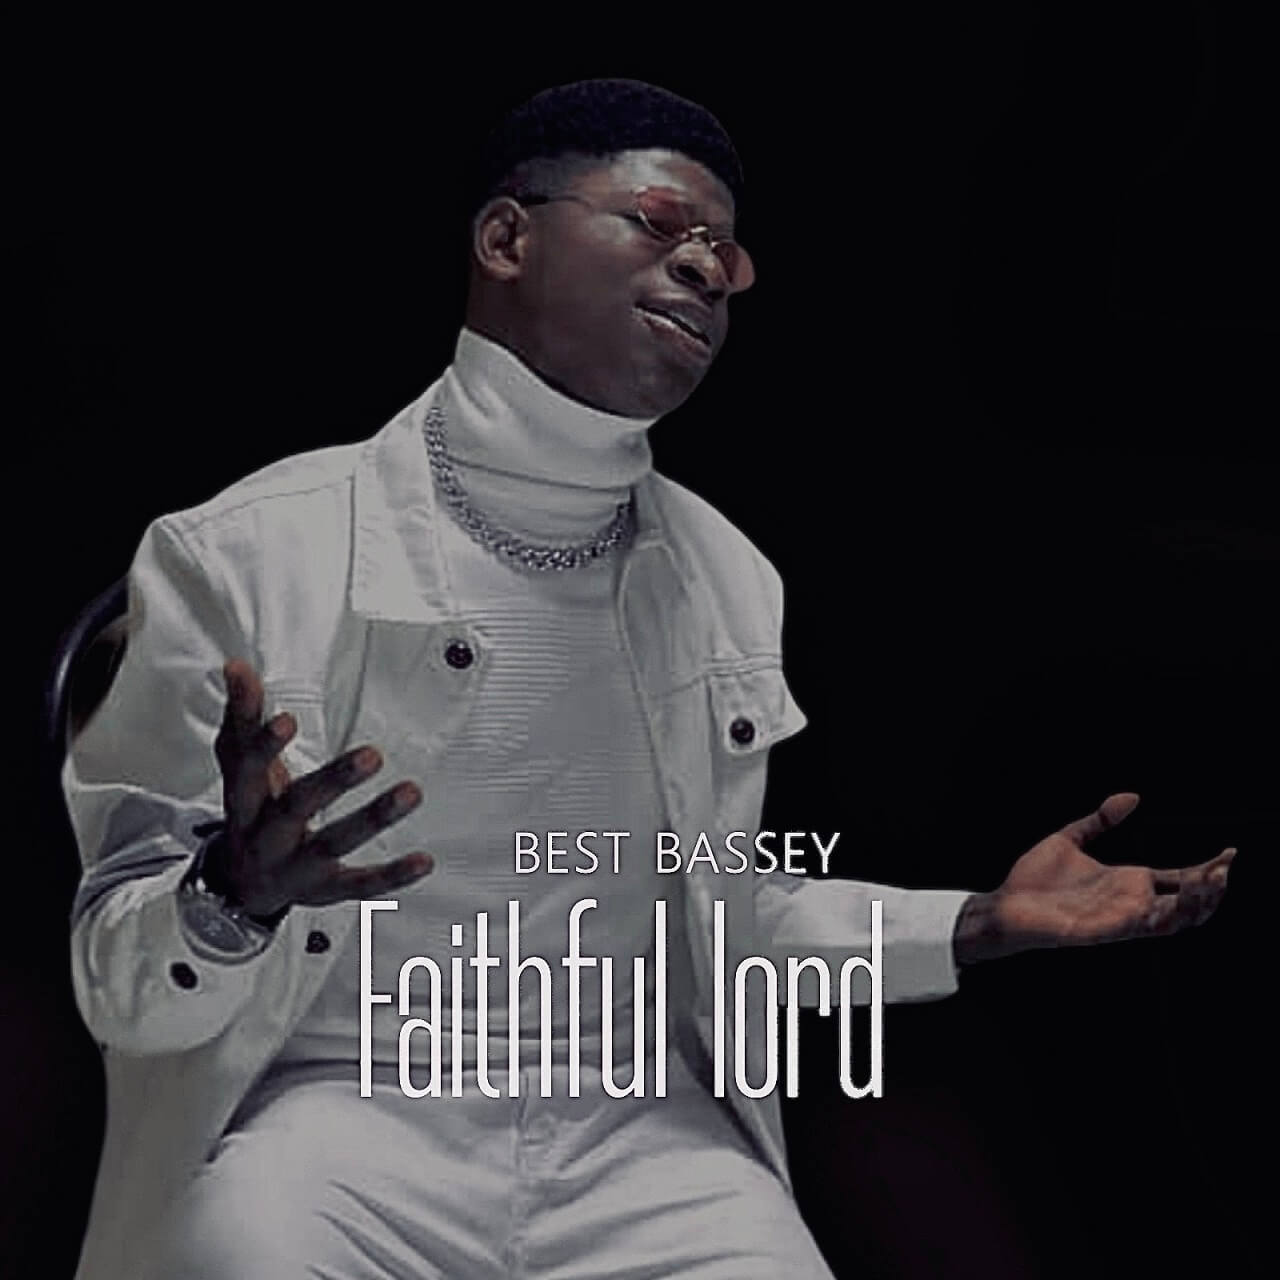 Best-Bassey-faithful-lord